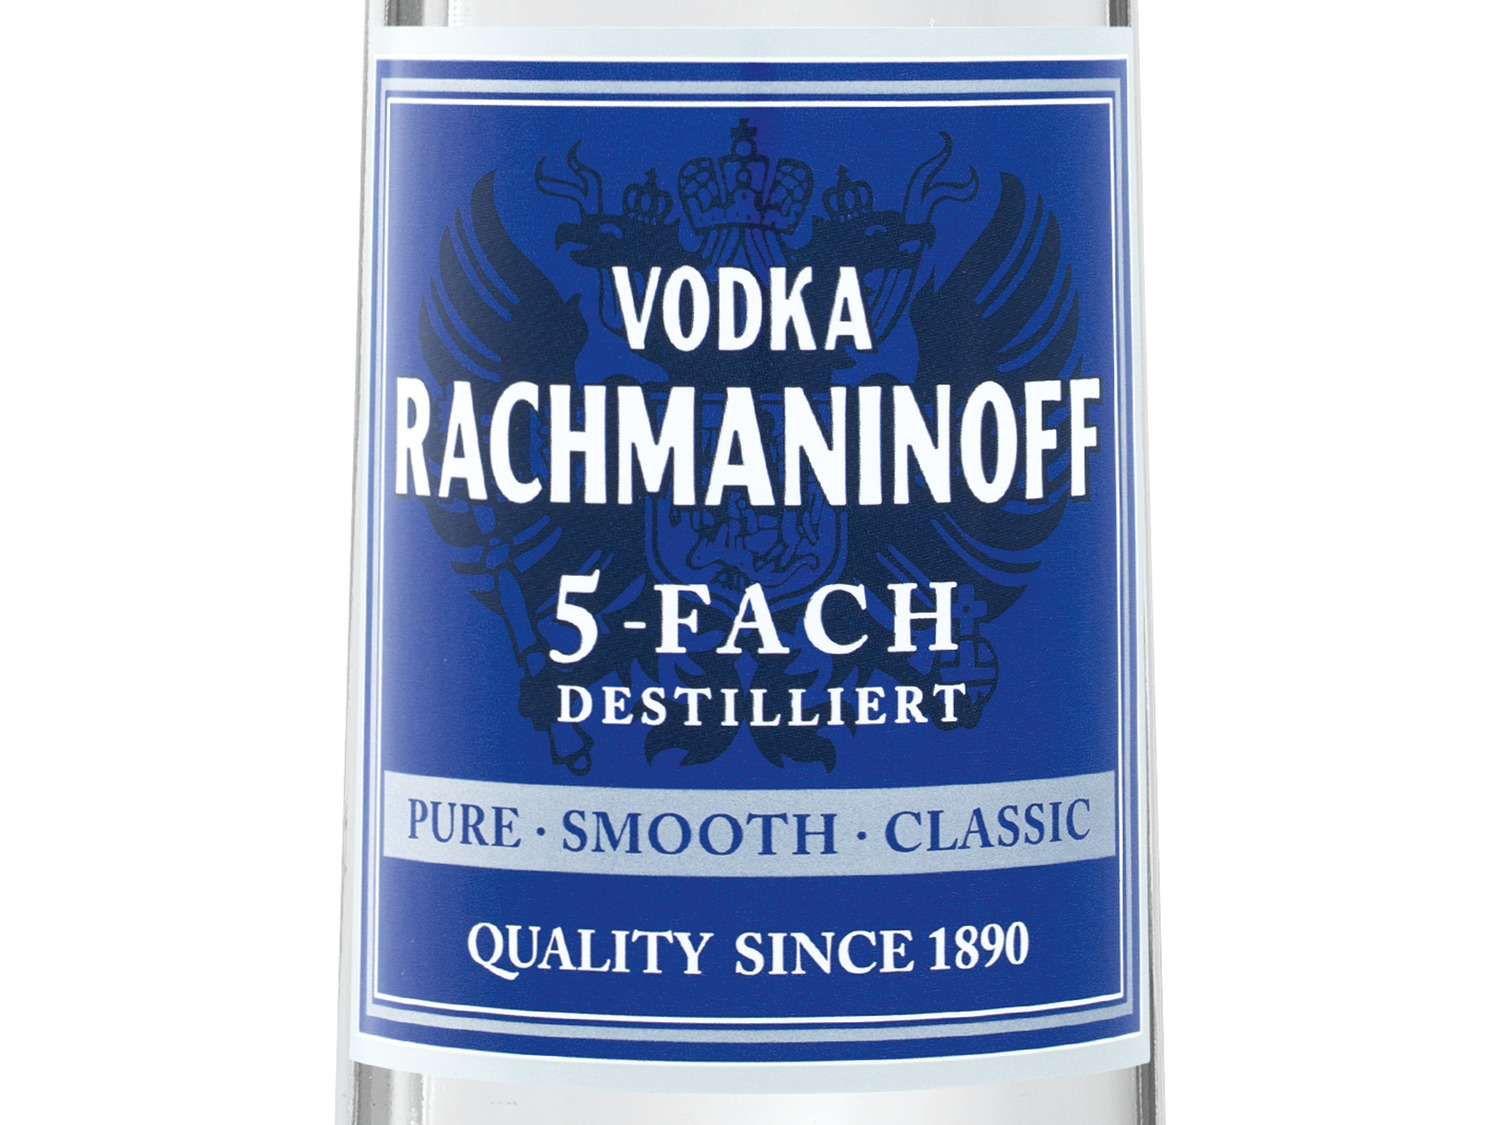 Vol 40% | destilliert Wodka 5-fach RACHMANINOFF LIDL